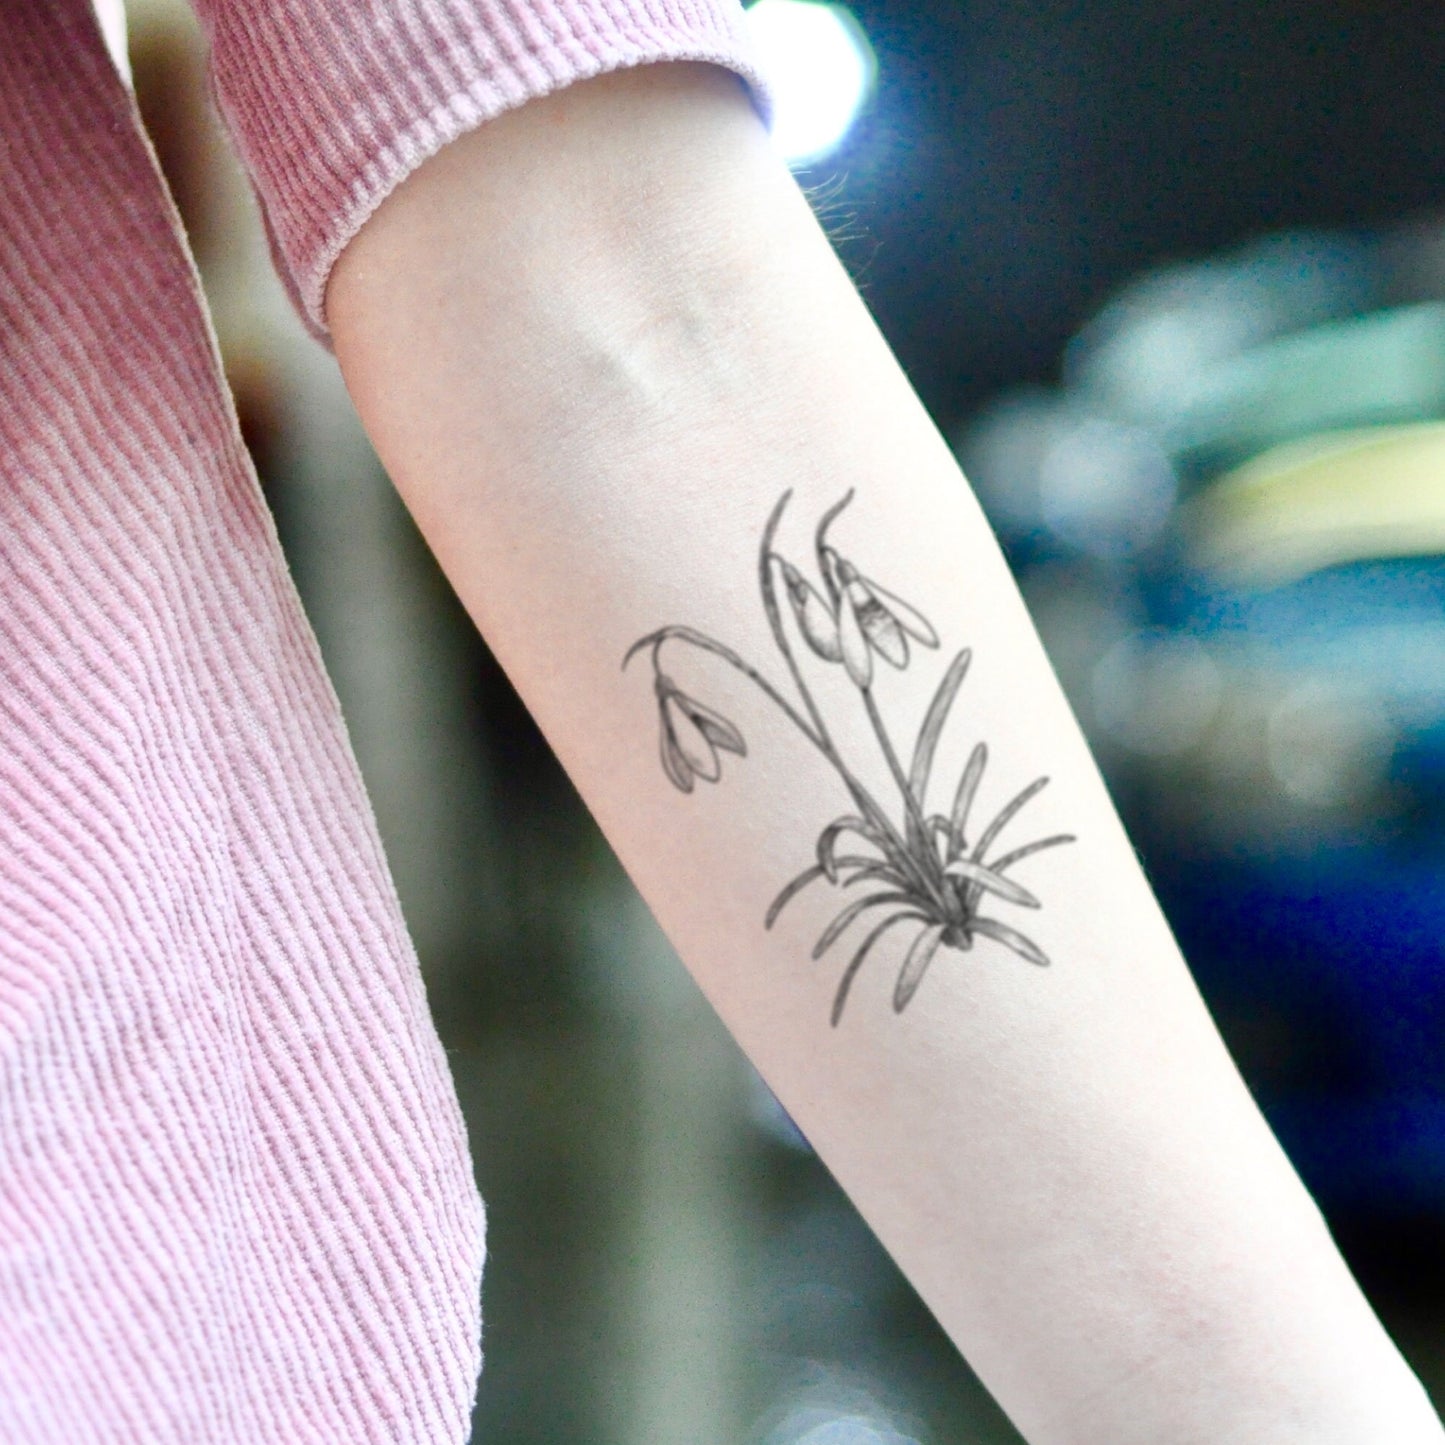 fake small snowdrop simple january birth flower temporary tattoo sticker design idea on inner arm